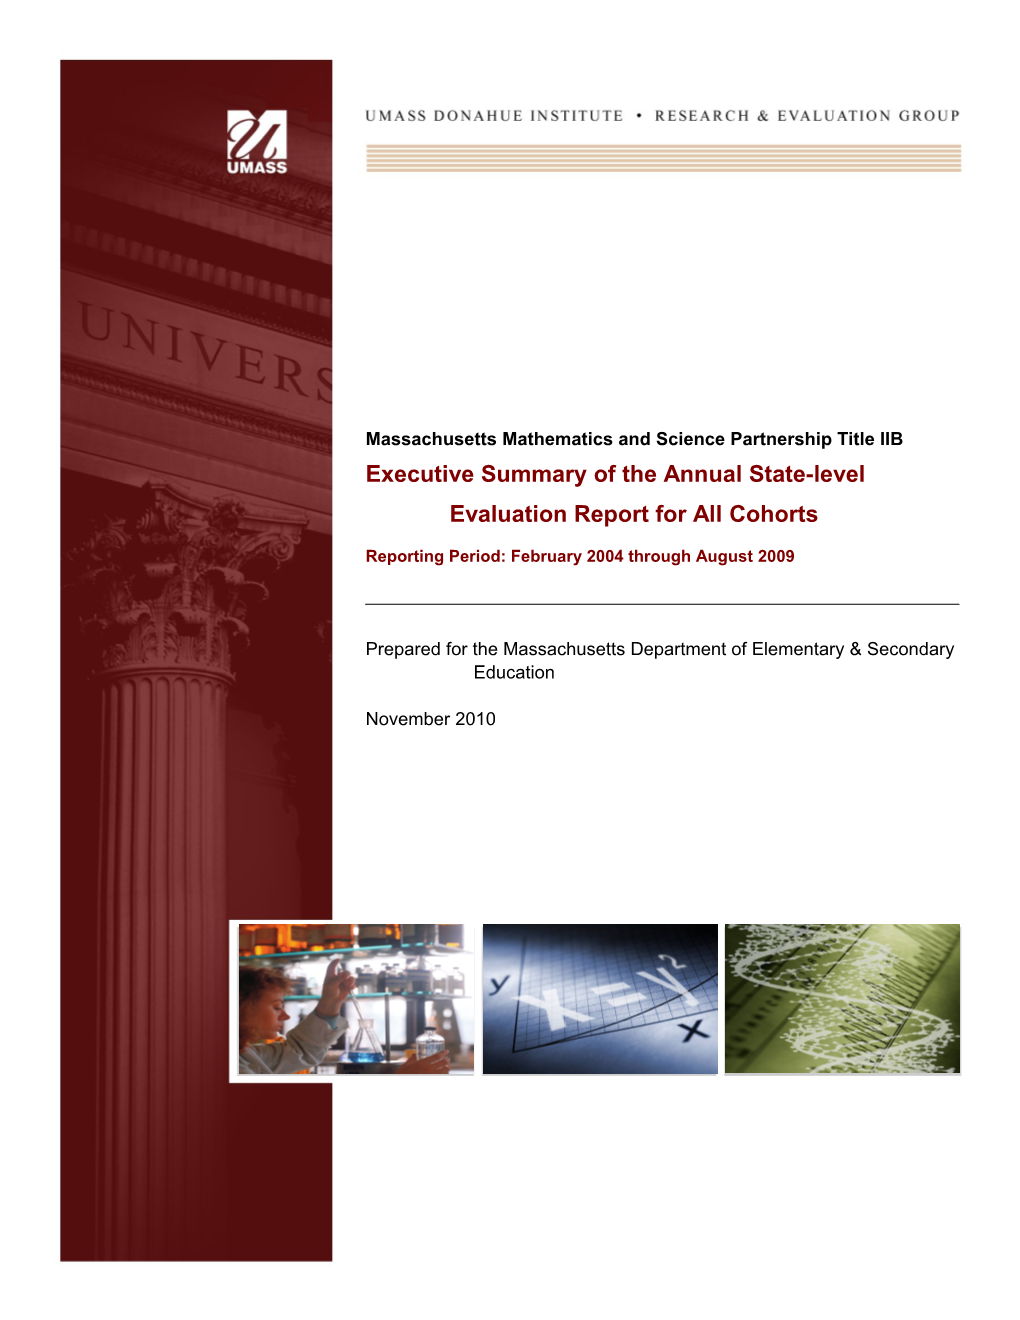 2004-2009 Executive Summary of MMSP Evaluation Report